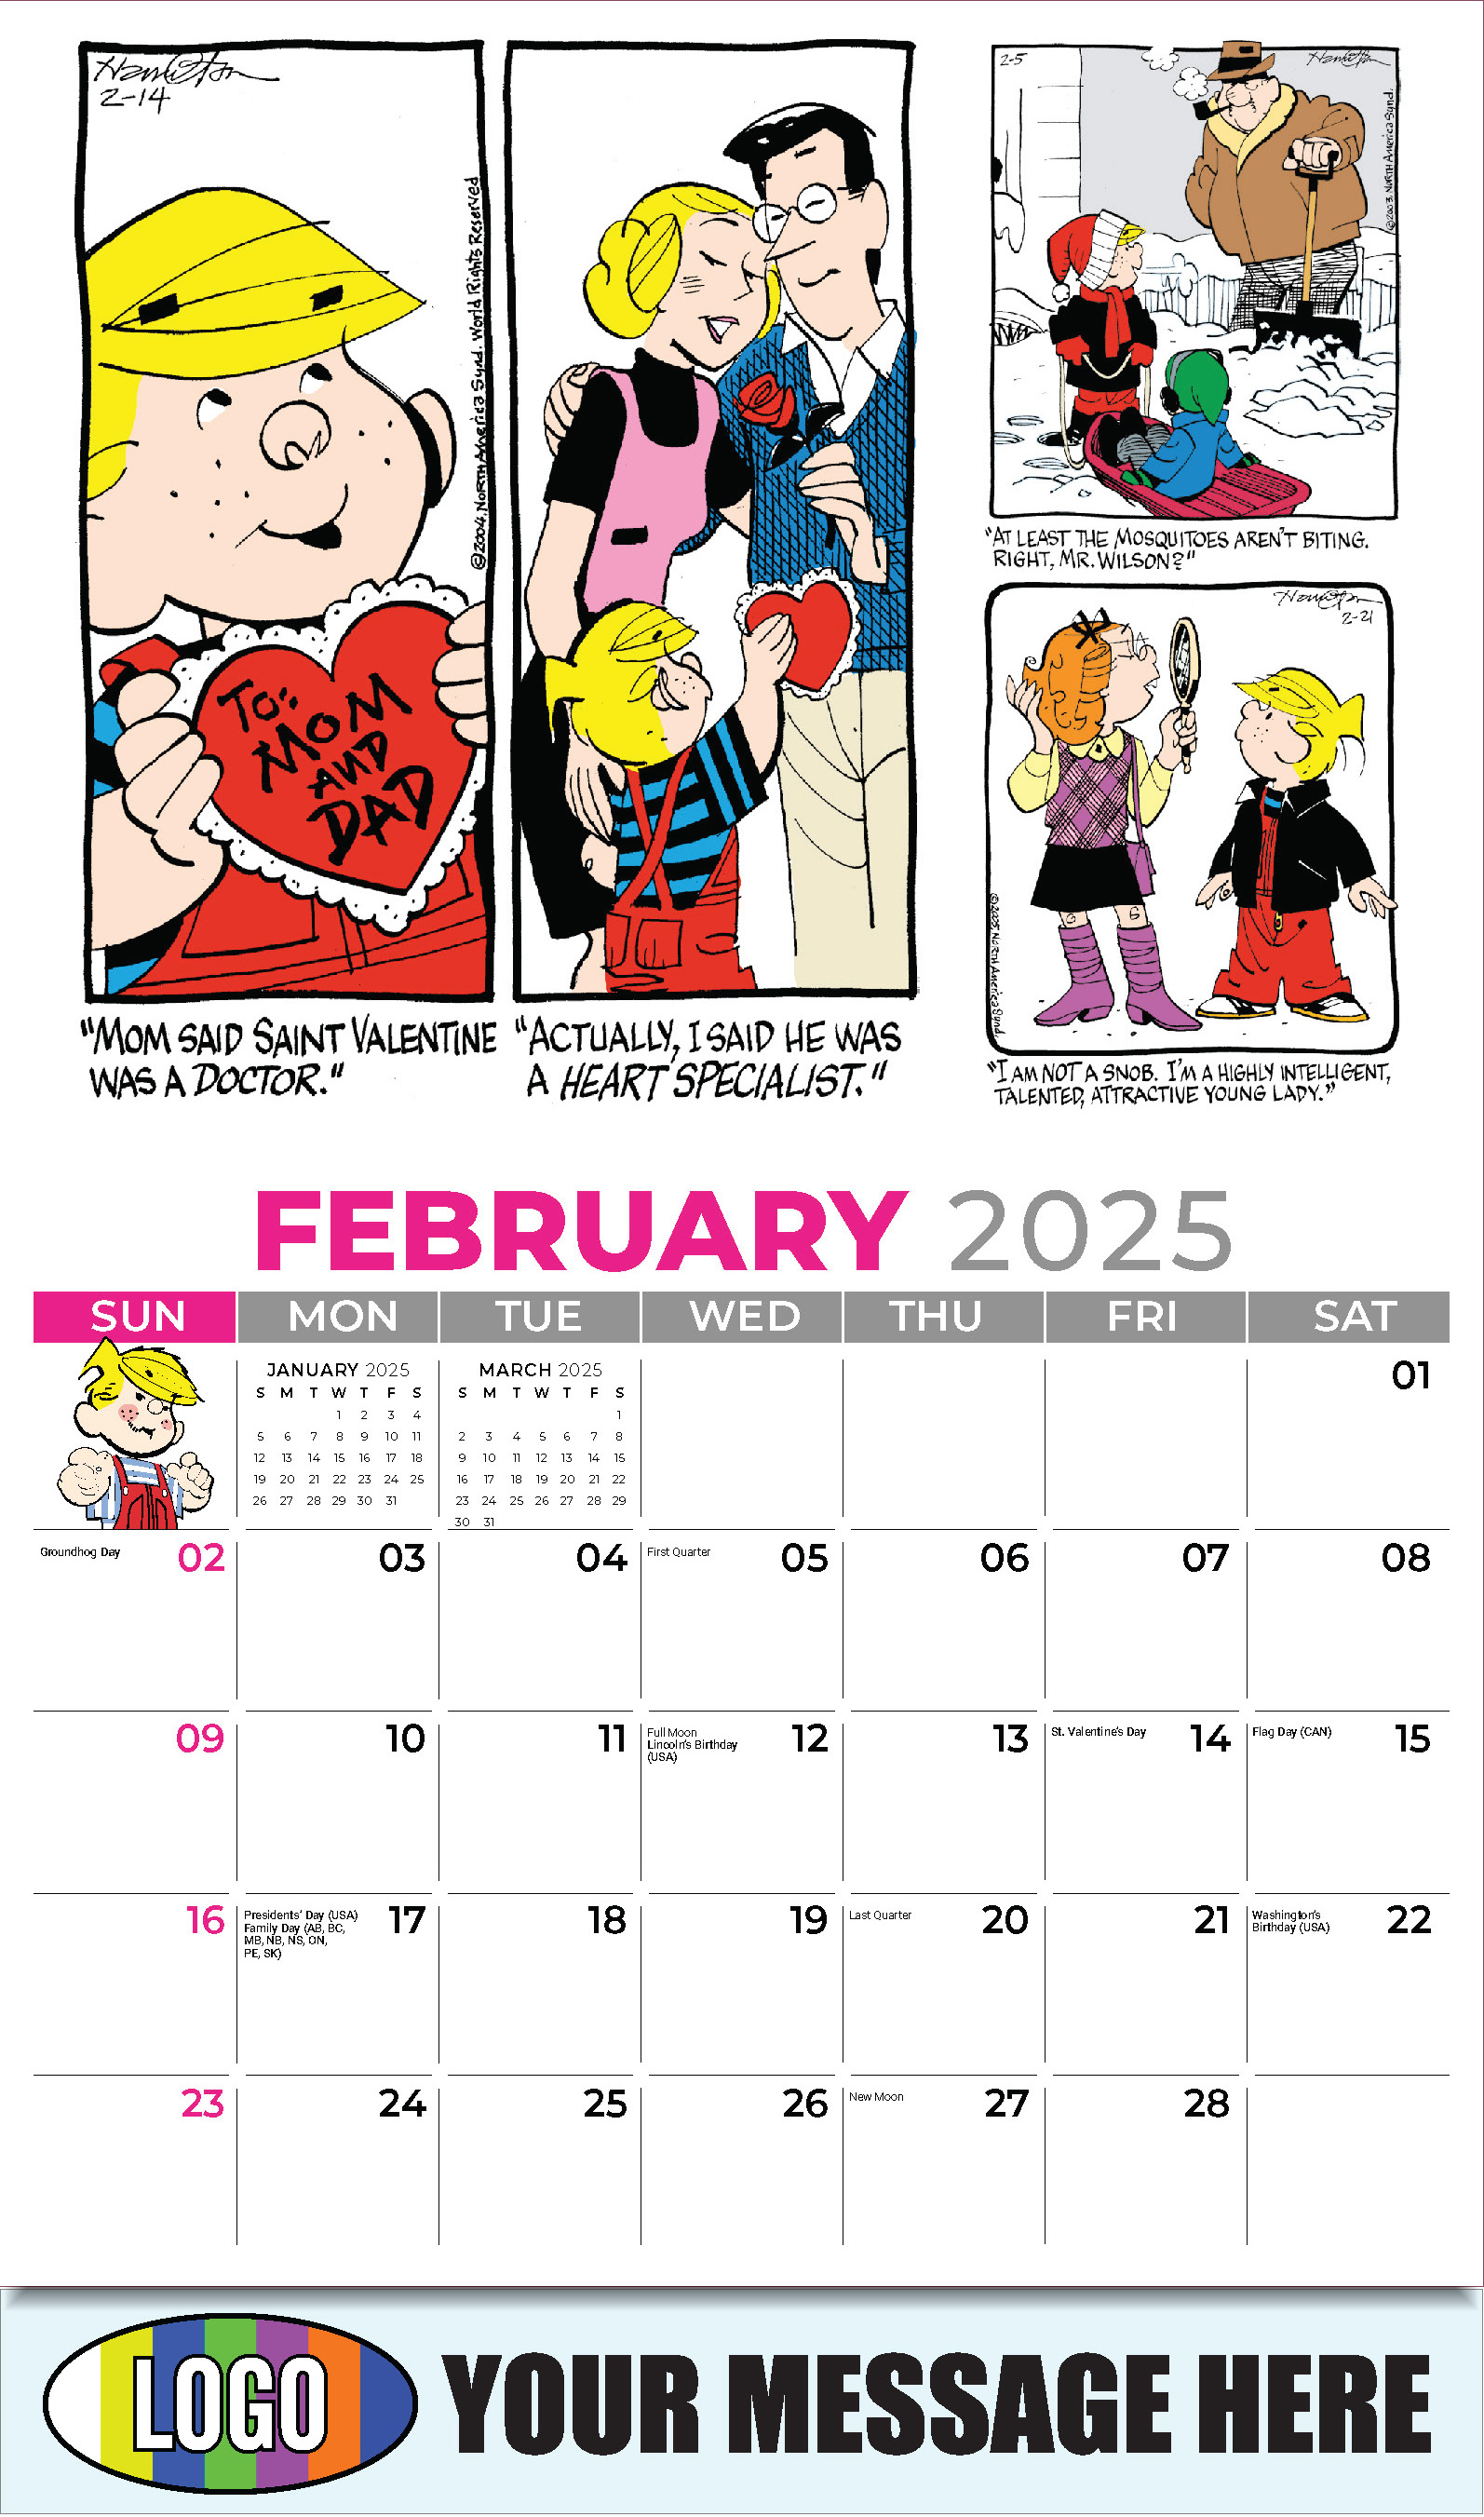 Dennis the Menace 2025 Business Promotional Wall Calendar - February